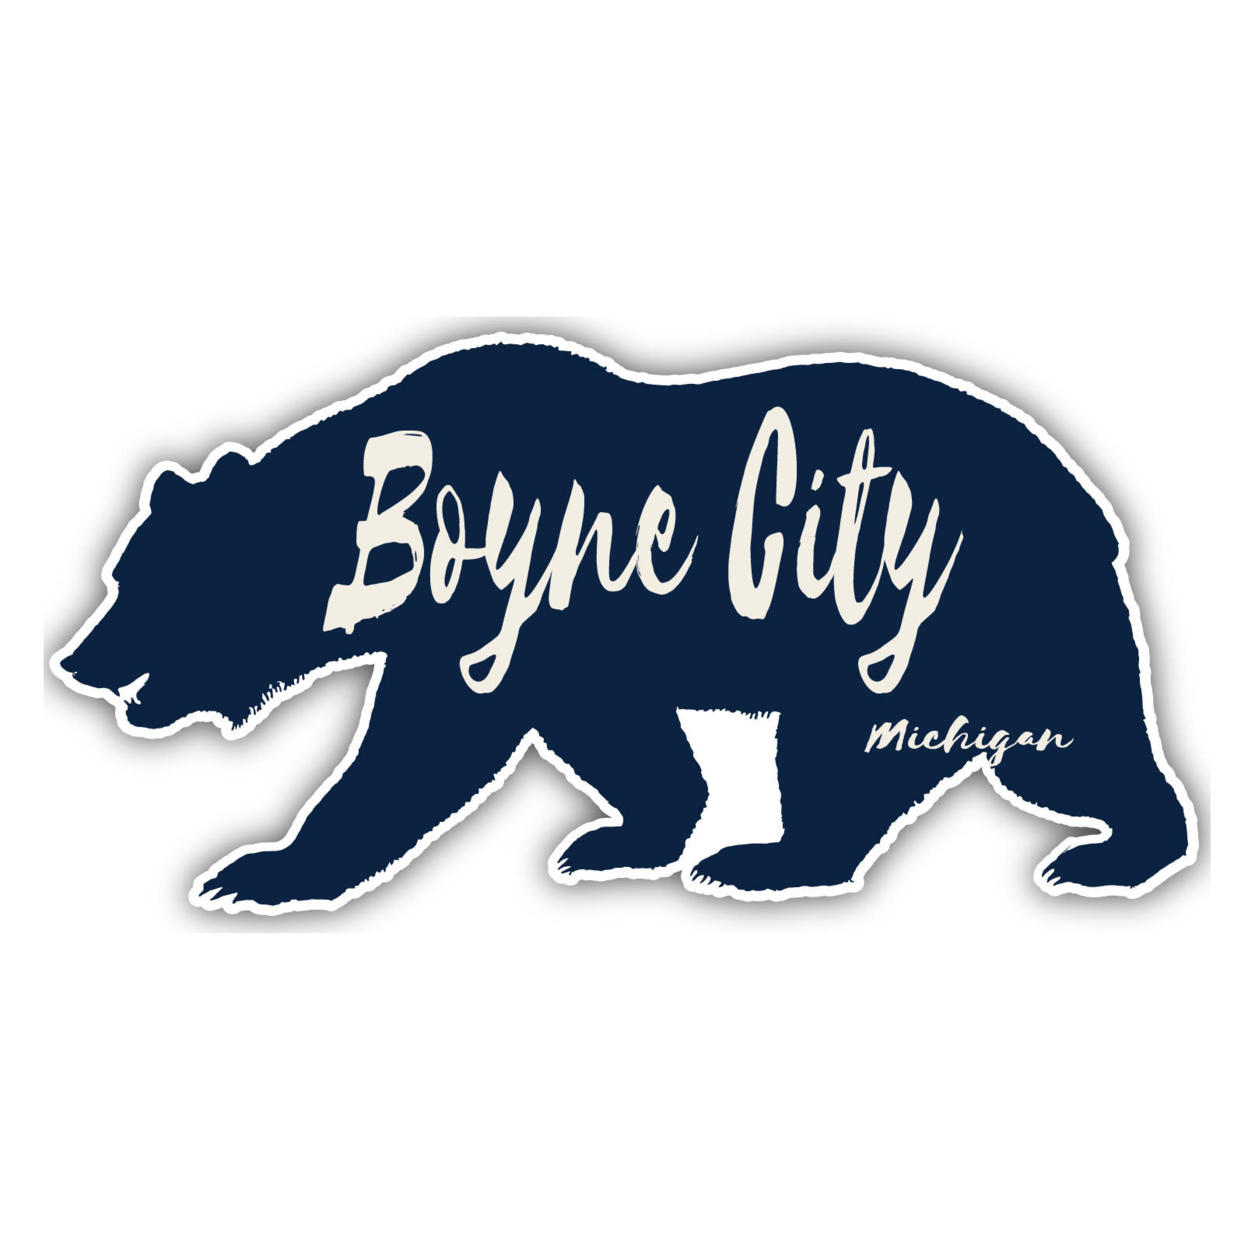 Boyne City Michigan Souvenir Decorative Stickers (Choose Theme And Size) - Single Unit, 8-Inch, Bear